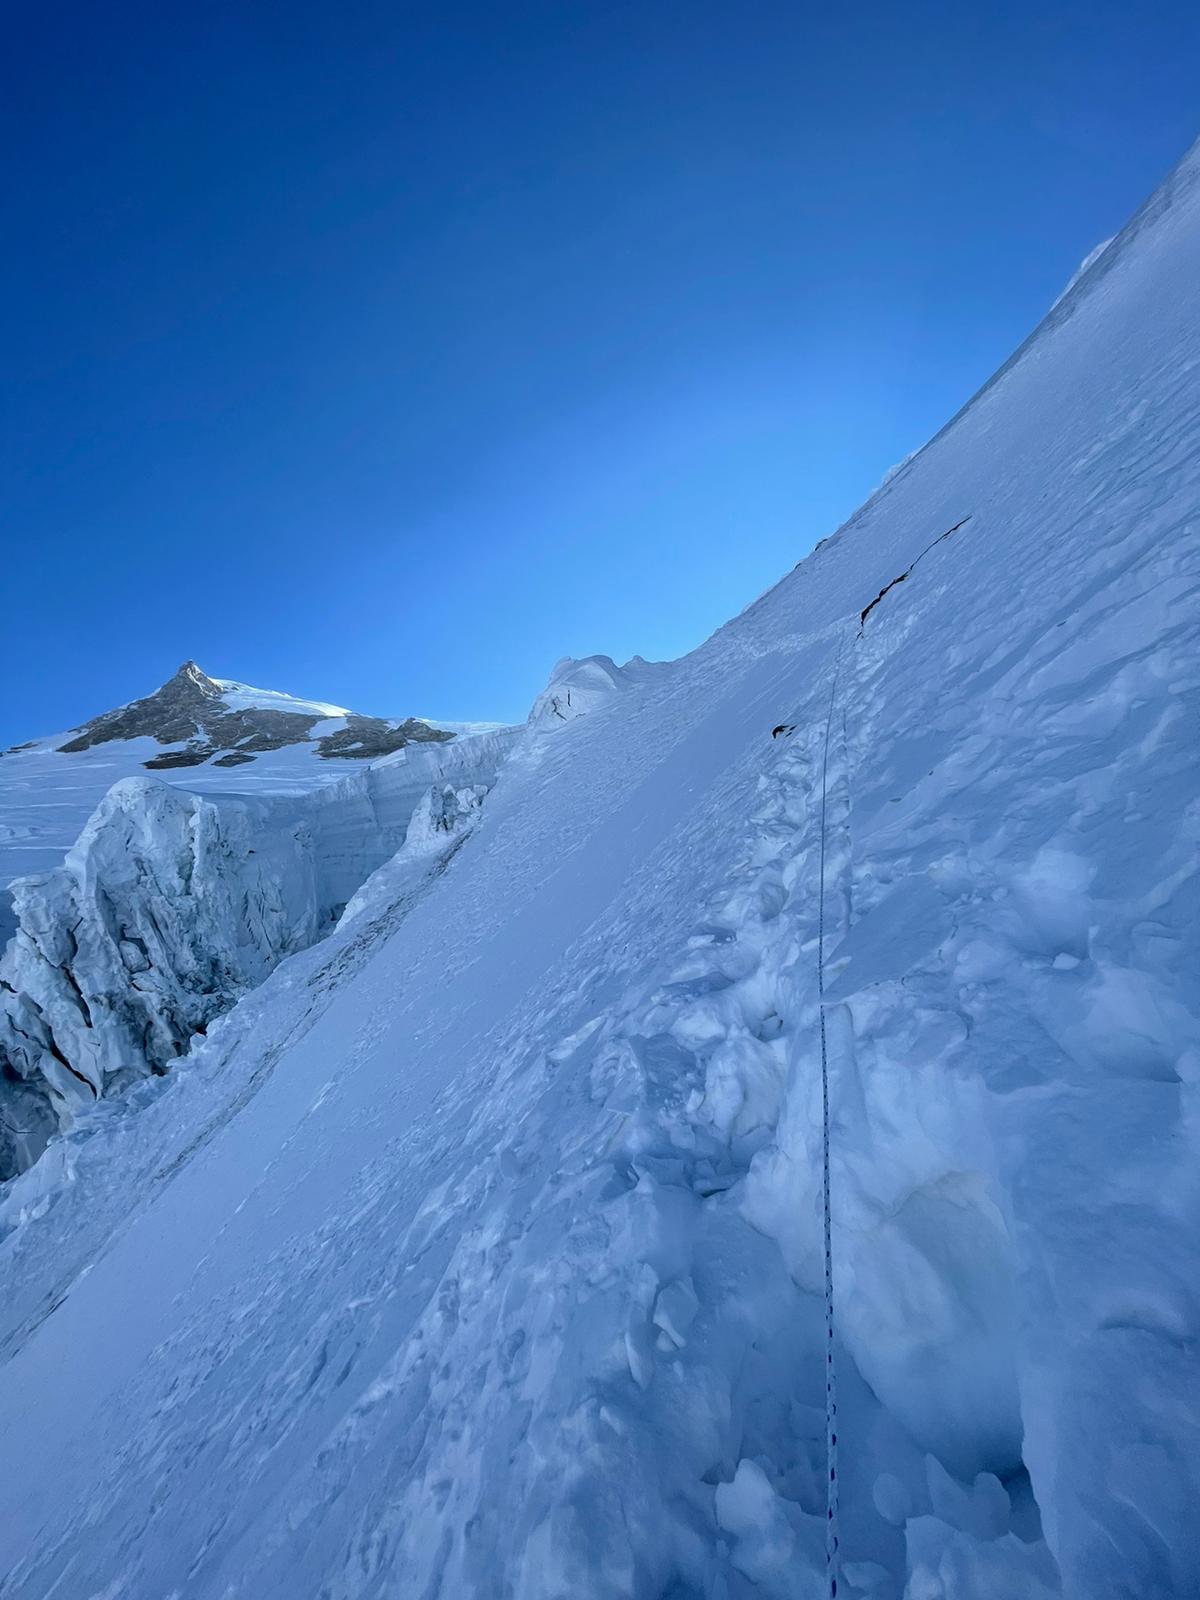 Симоне Моро (Simone Moro) - в поисках пути через ледовую трещину. Фото Simone Moro